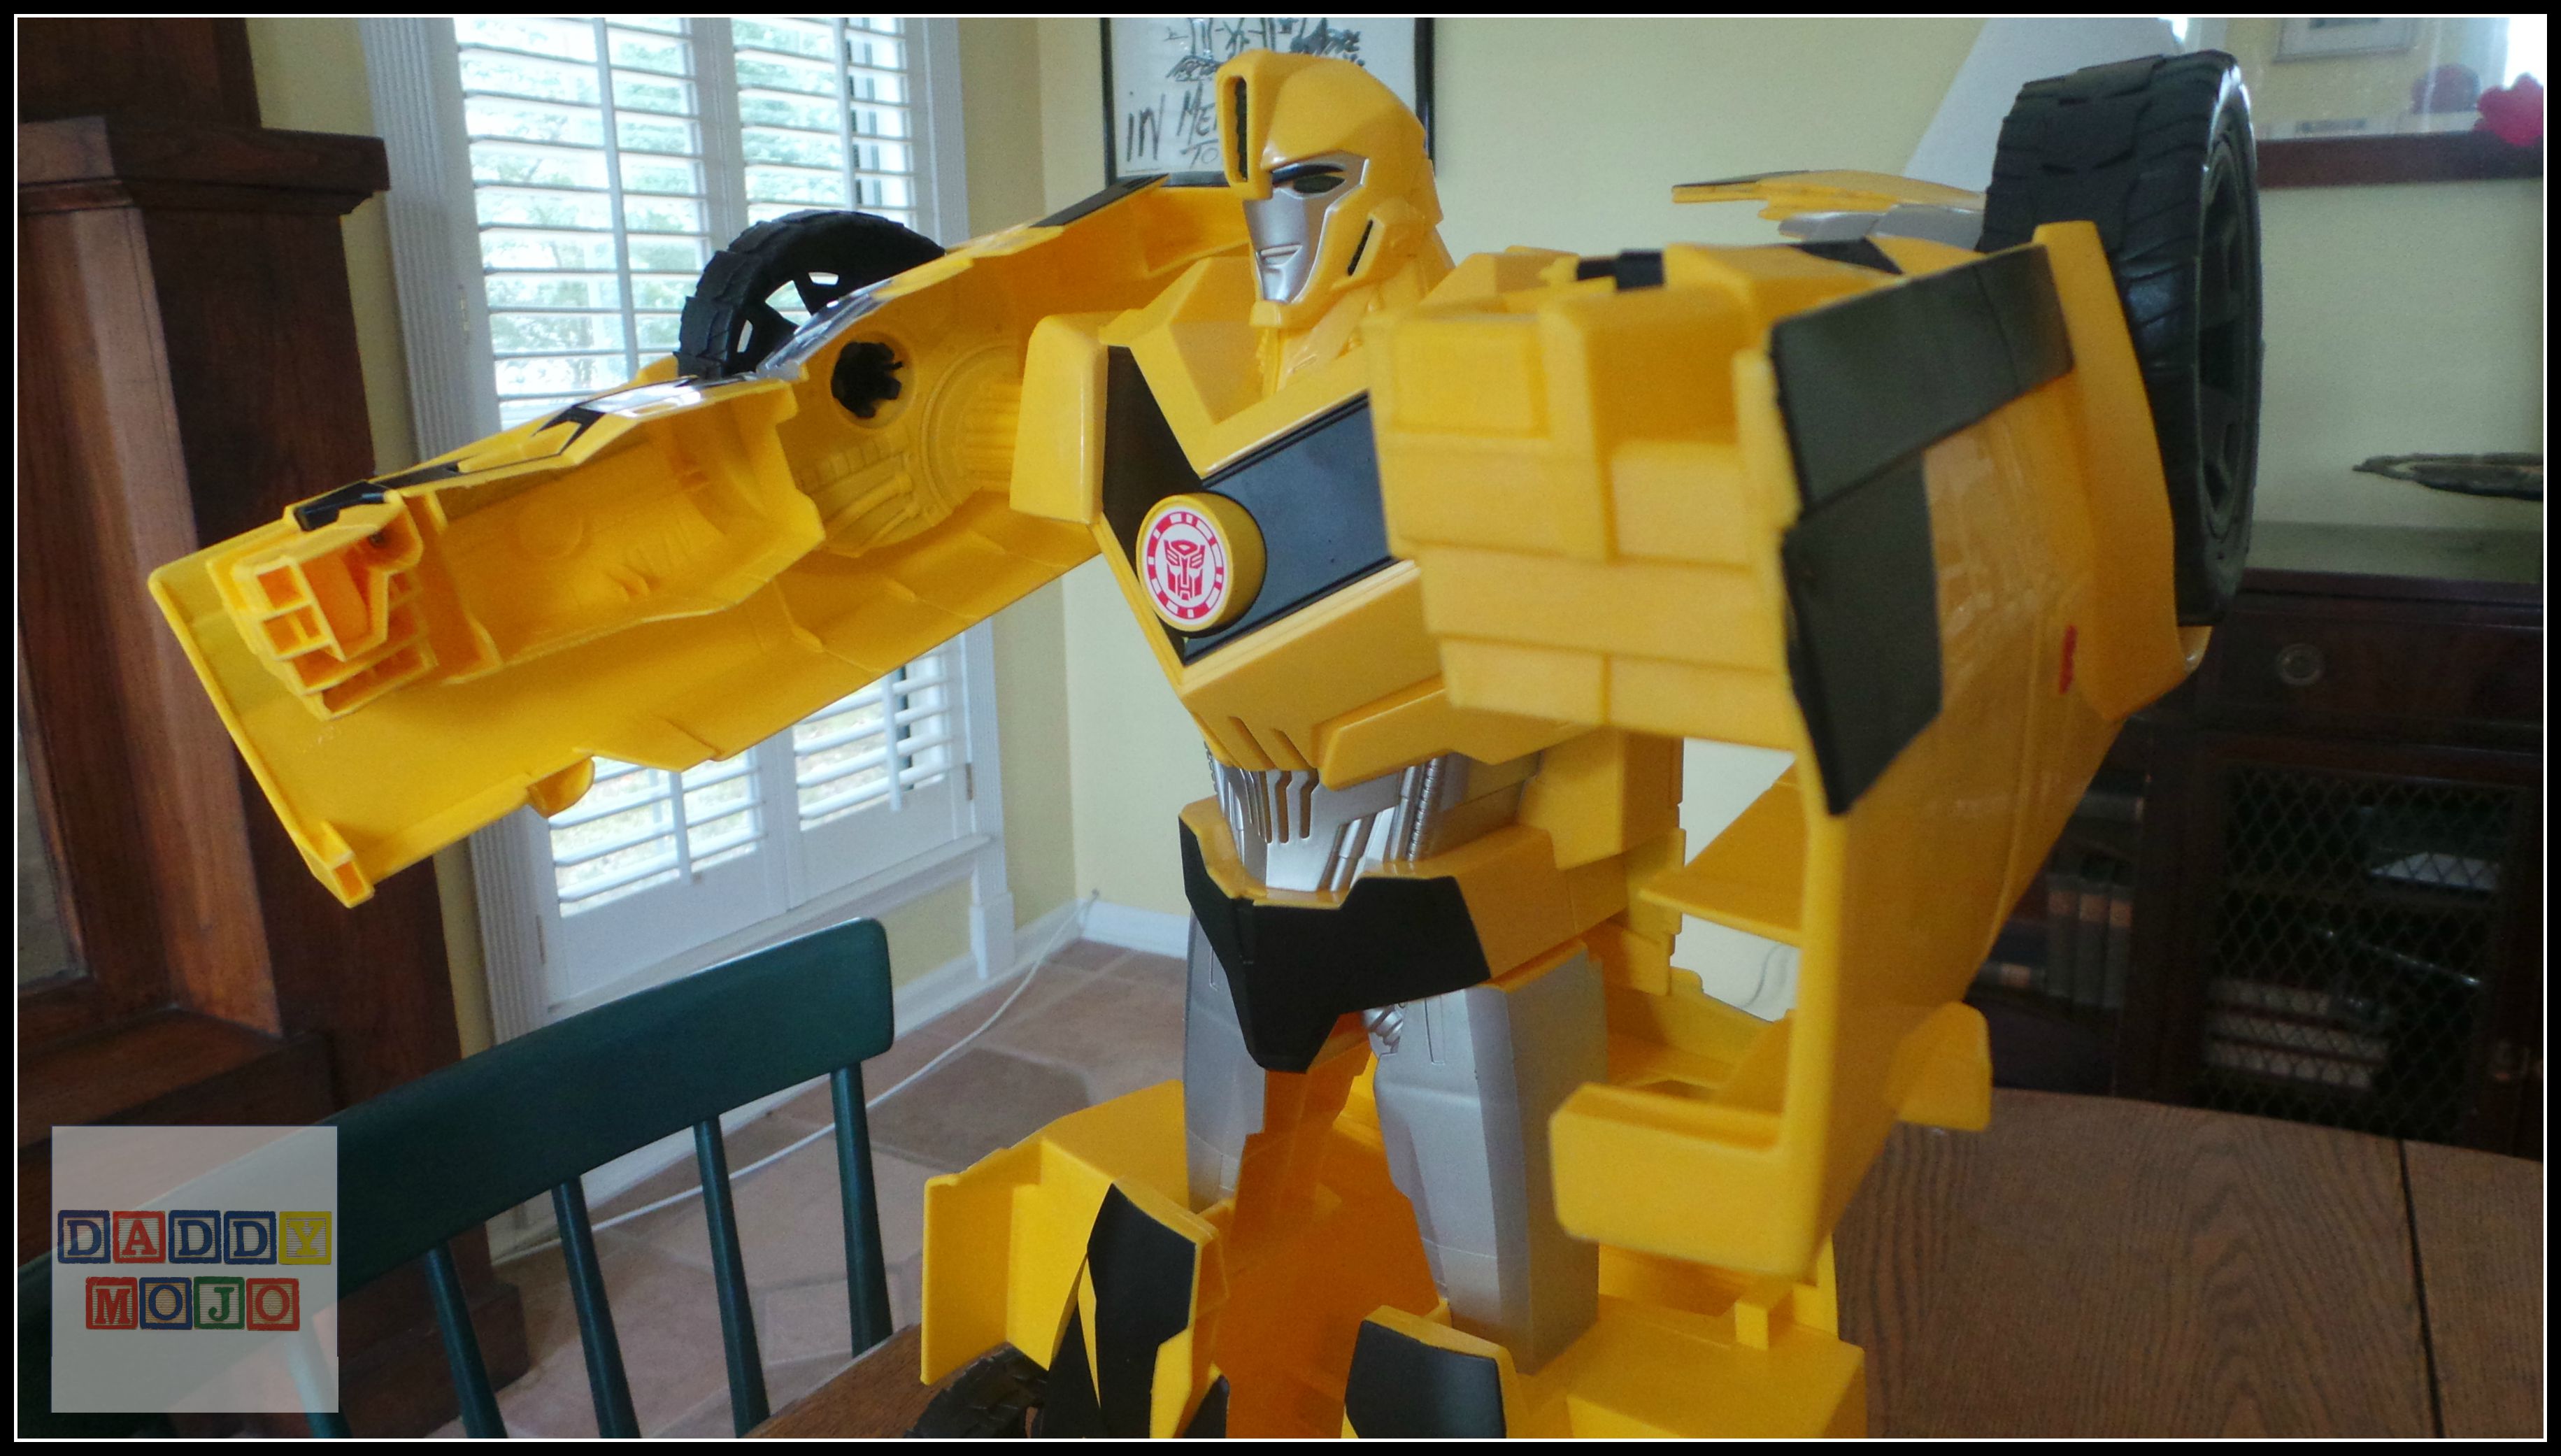 super bumblebee transformer toy